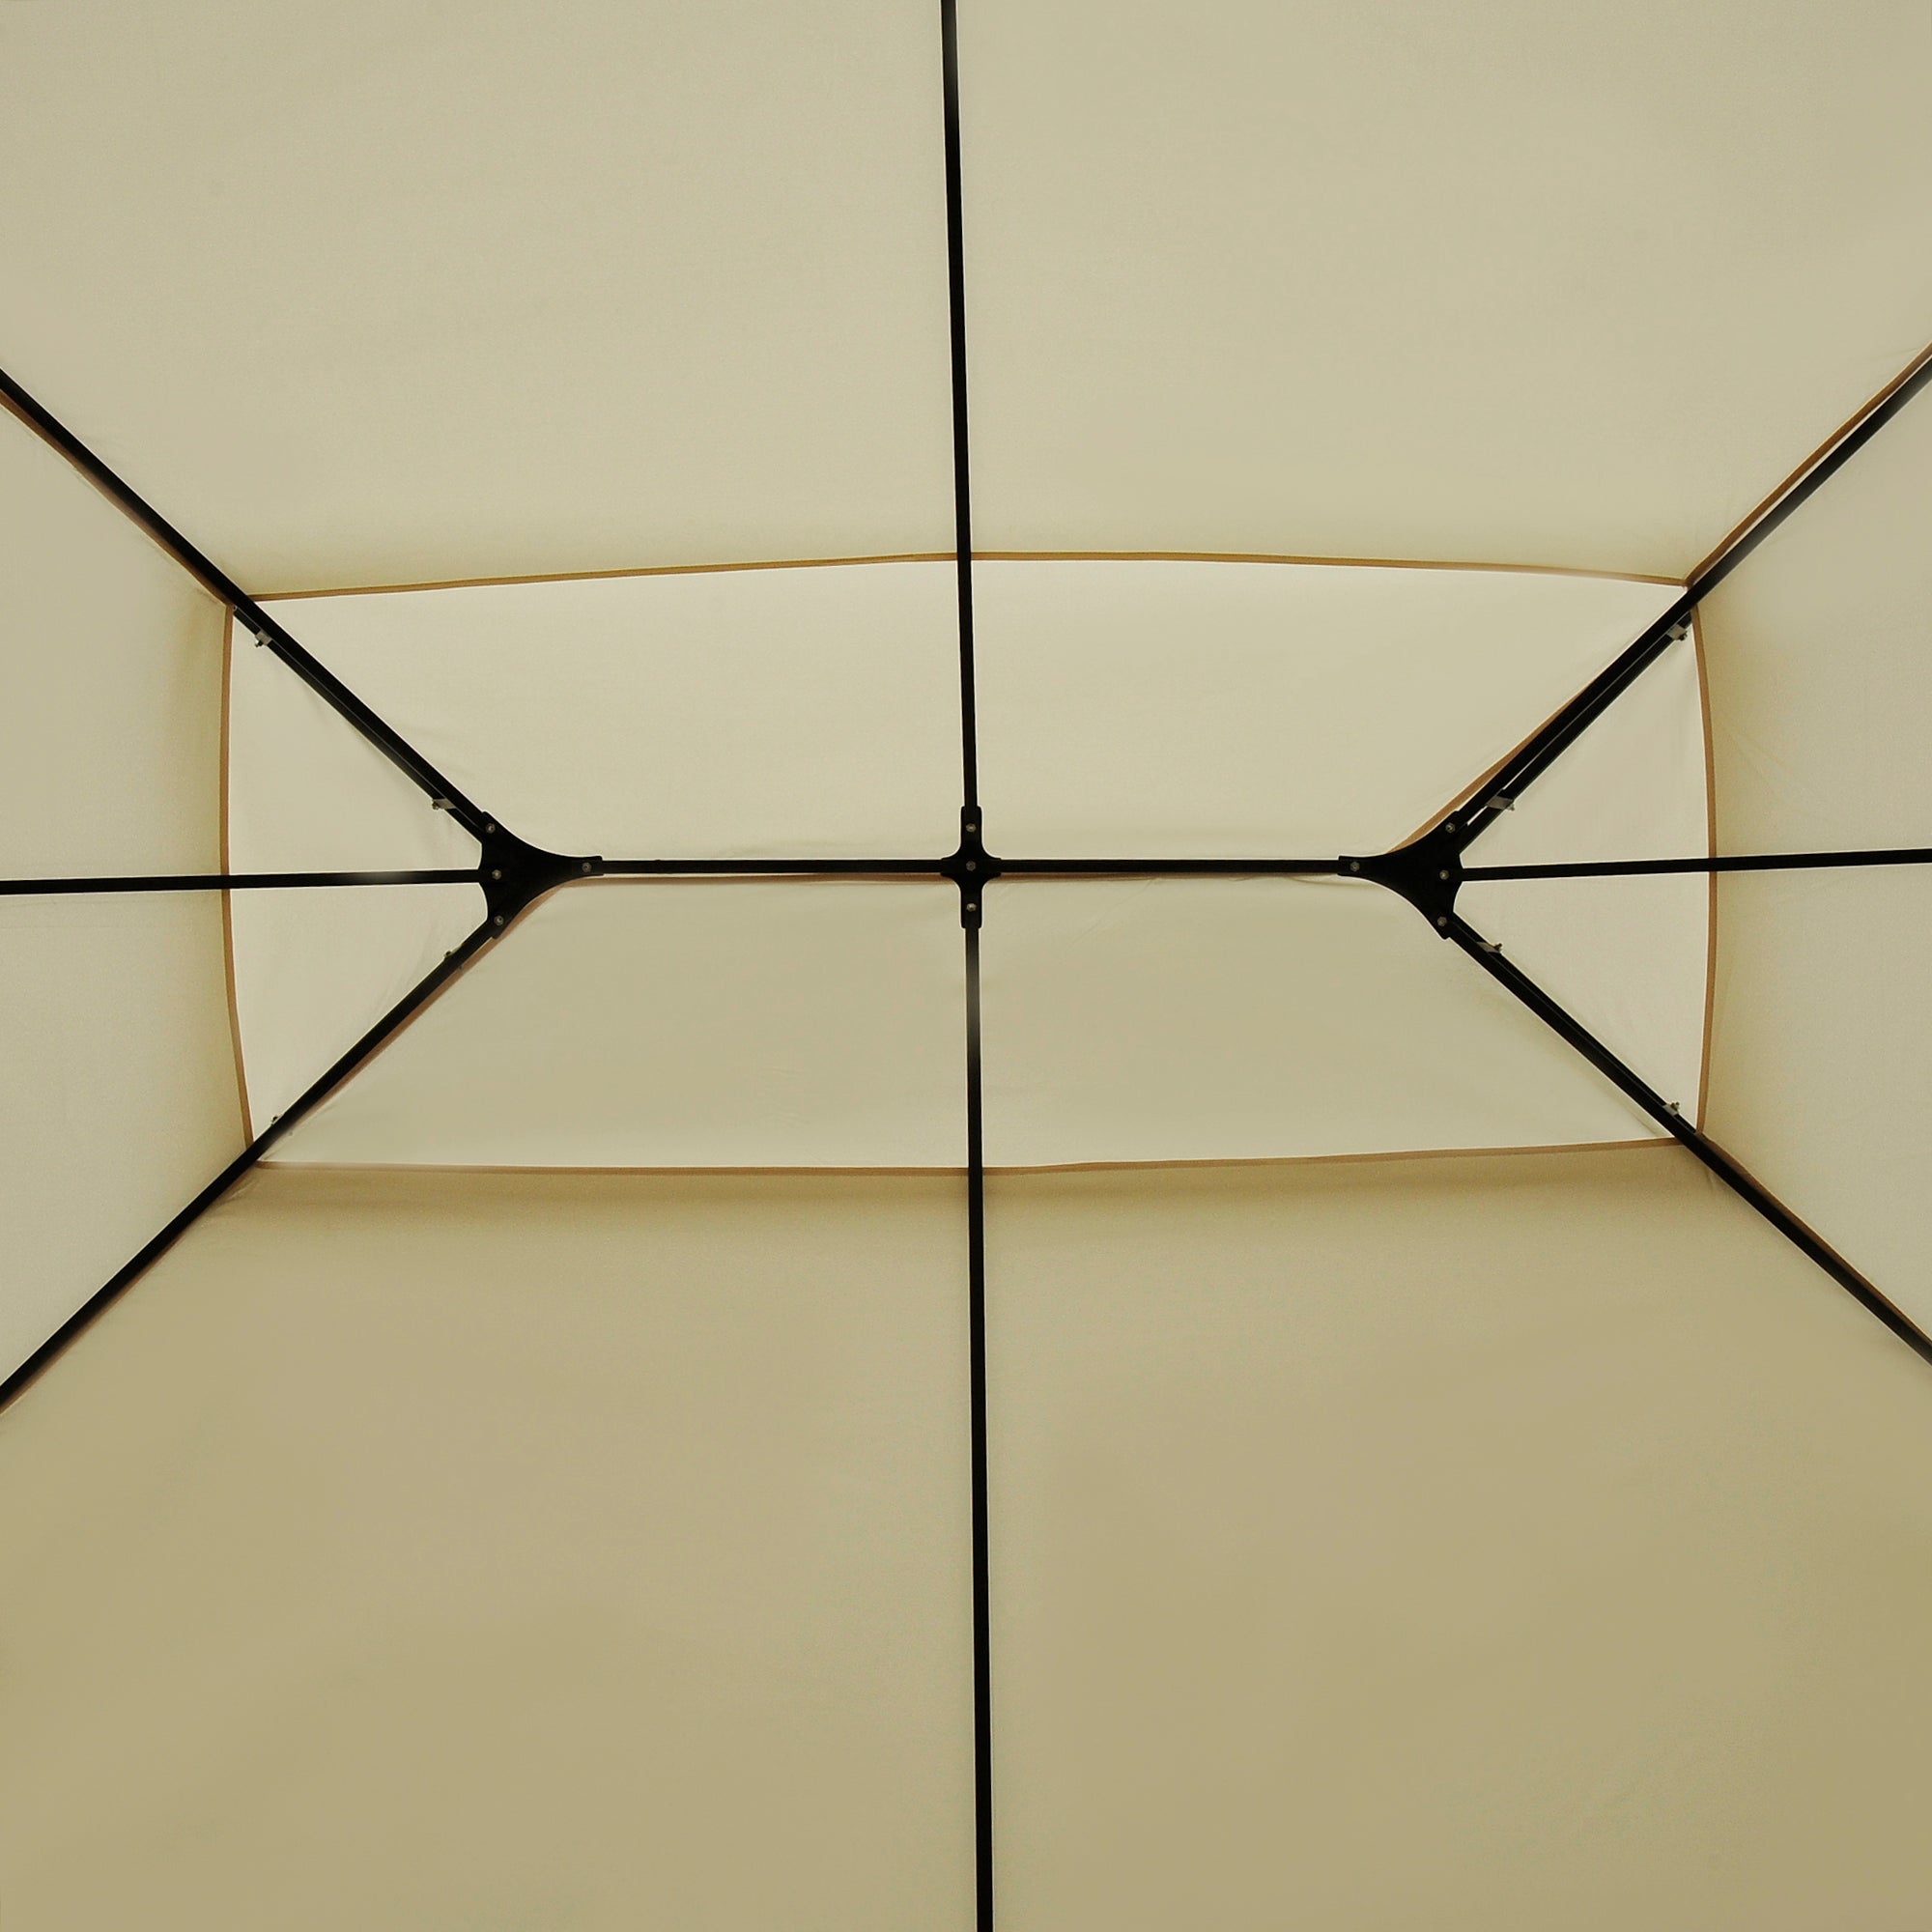 10' x 13' Patio Gazebo, Outdoor Gazebo Canopy Shelter white-steel